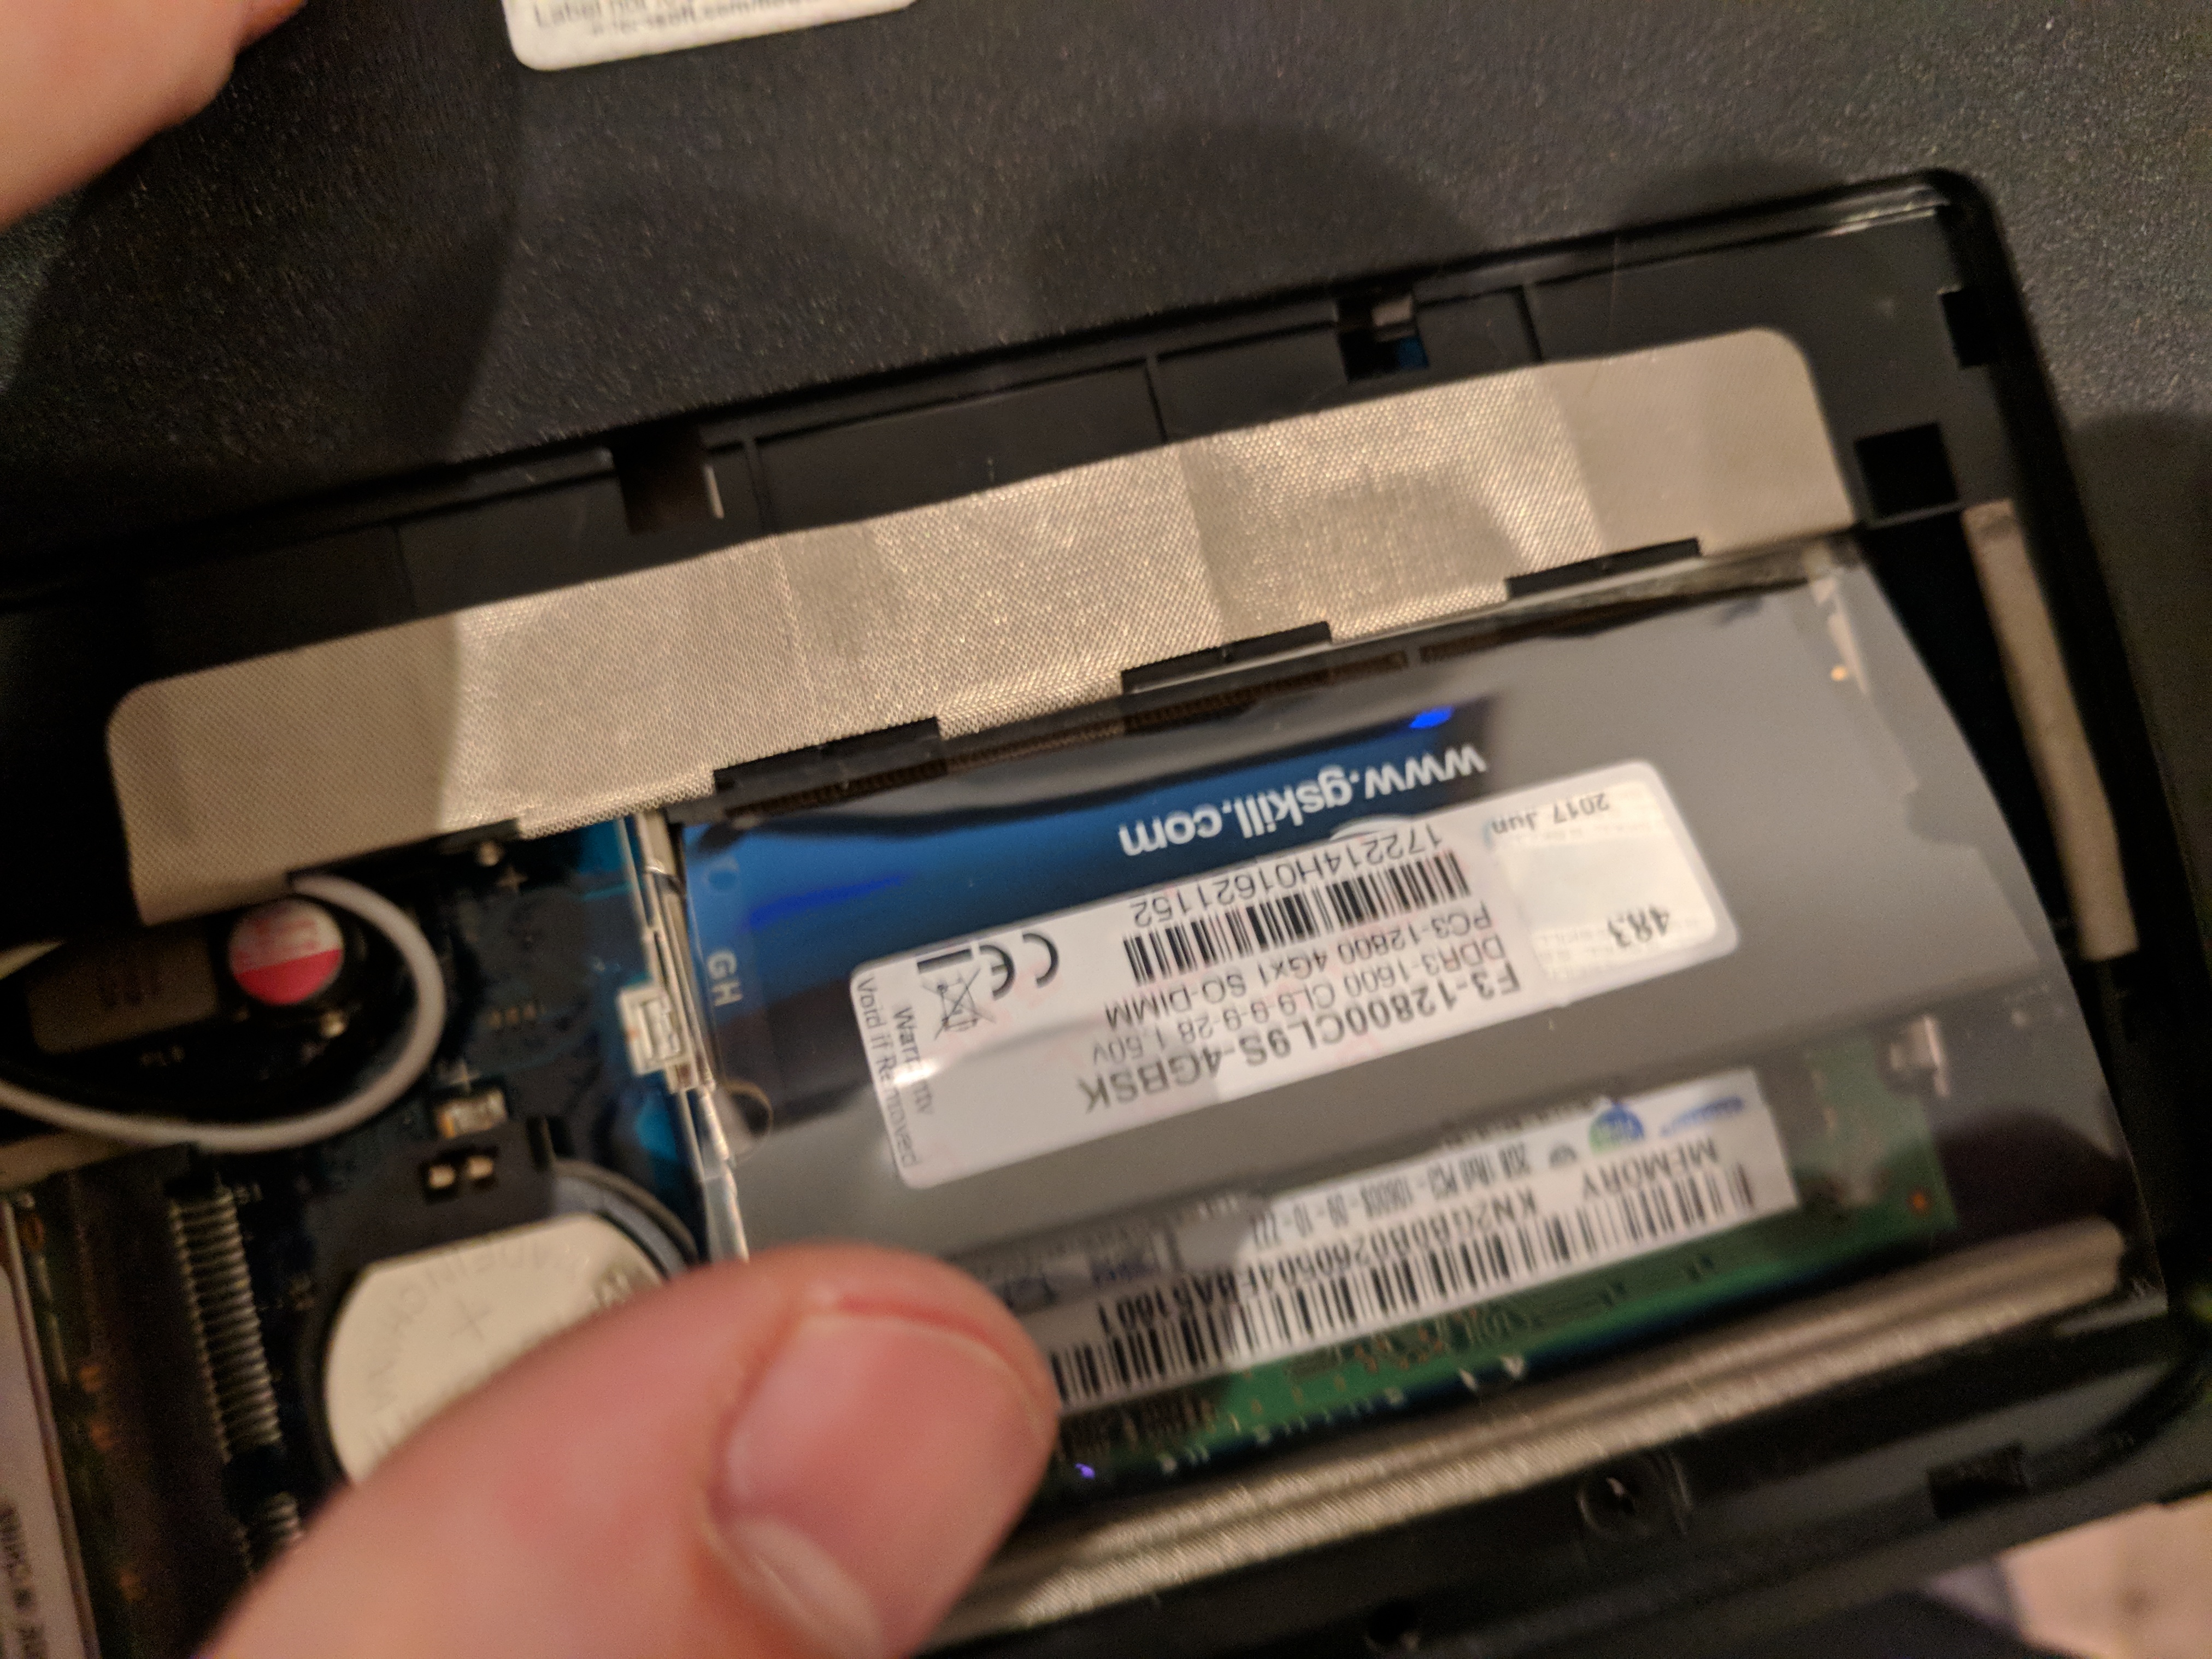 Installing some new RAM!